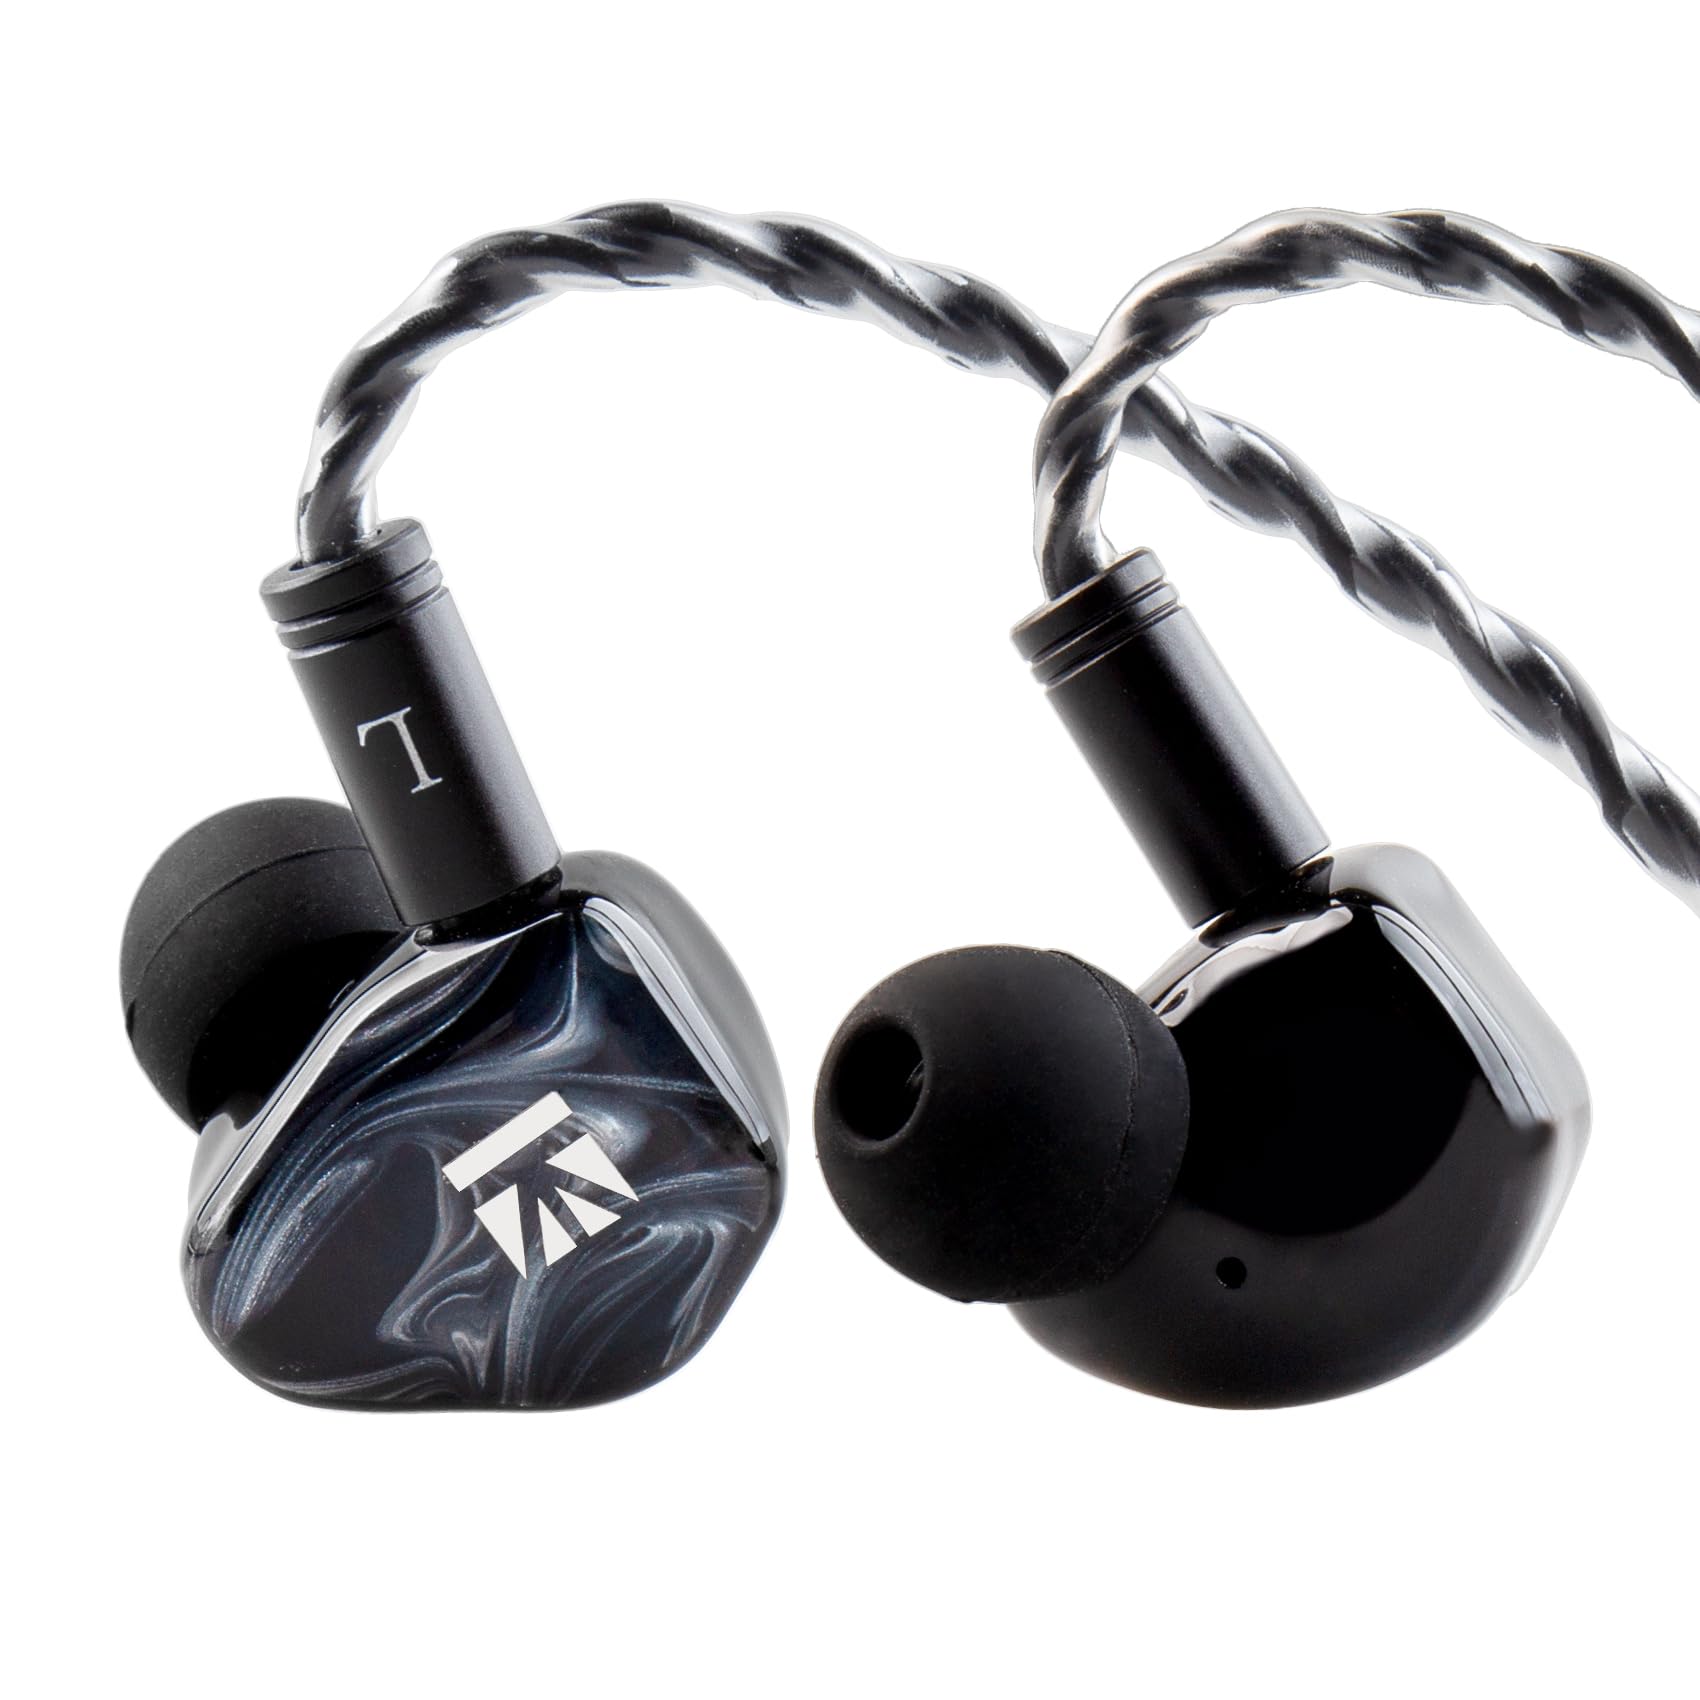 Yinyoo 中華 イヤホン 有線 KBEAR KB01 イアフォン Wired earphones 10MMベリリウムコート振動板 カナル型 イヤホン 有線 イヤモニ型 2pin リケーブル可能 イヤモニ型 3.5mmプラグ モニター パソコン用 (Wh